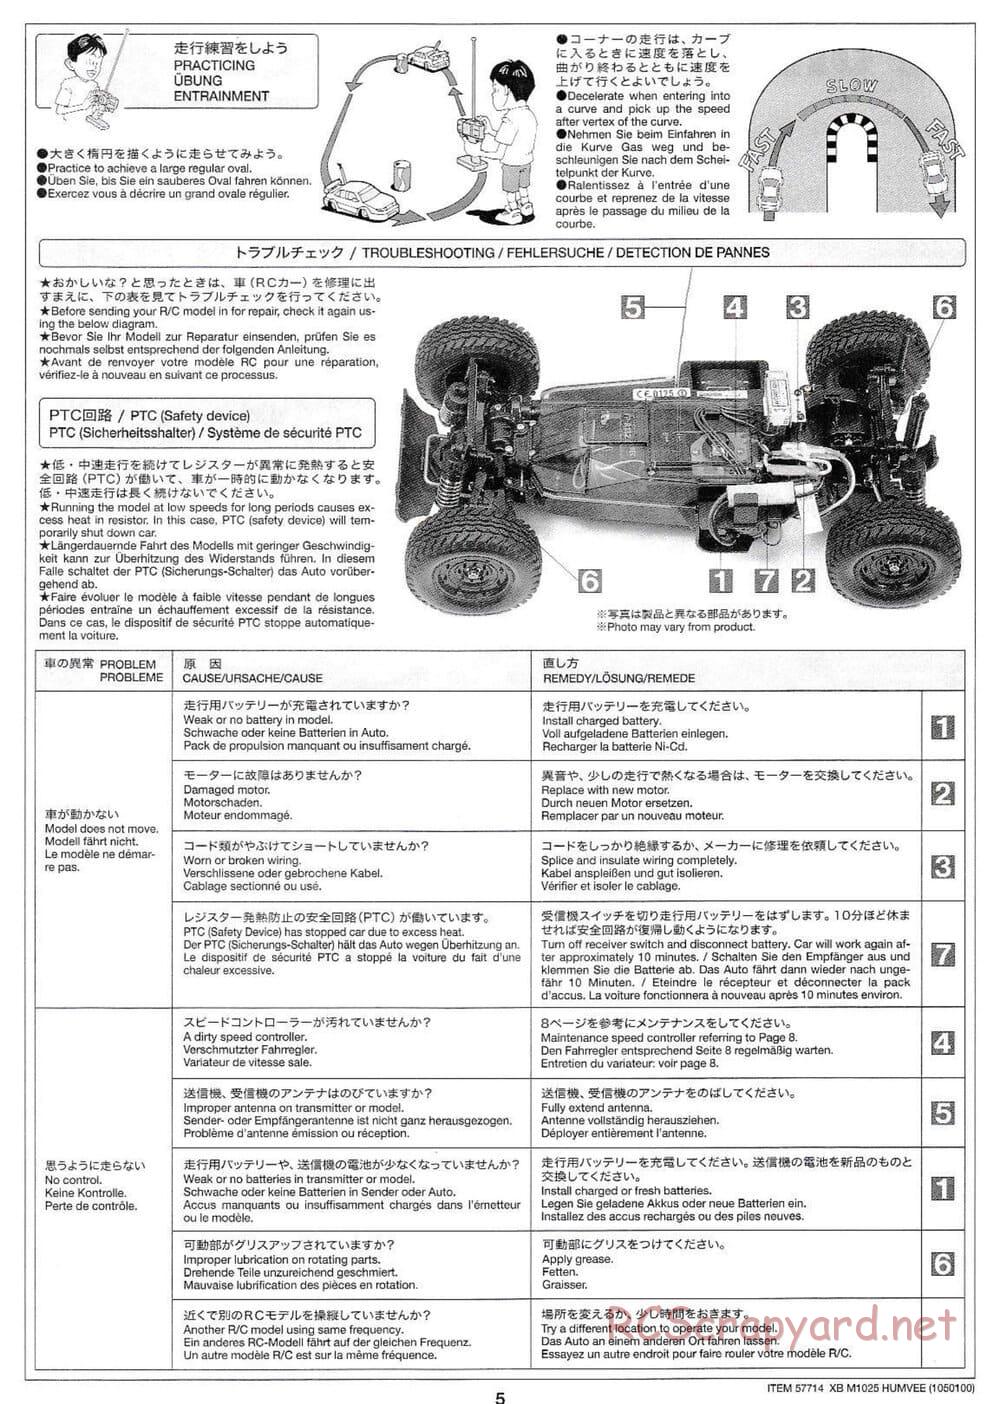 Tamiya - XB M1025 Humvee - DF-01 Chassis - Manual - Page 5